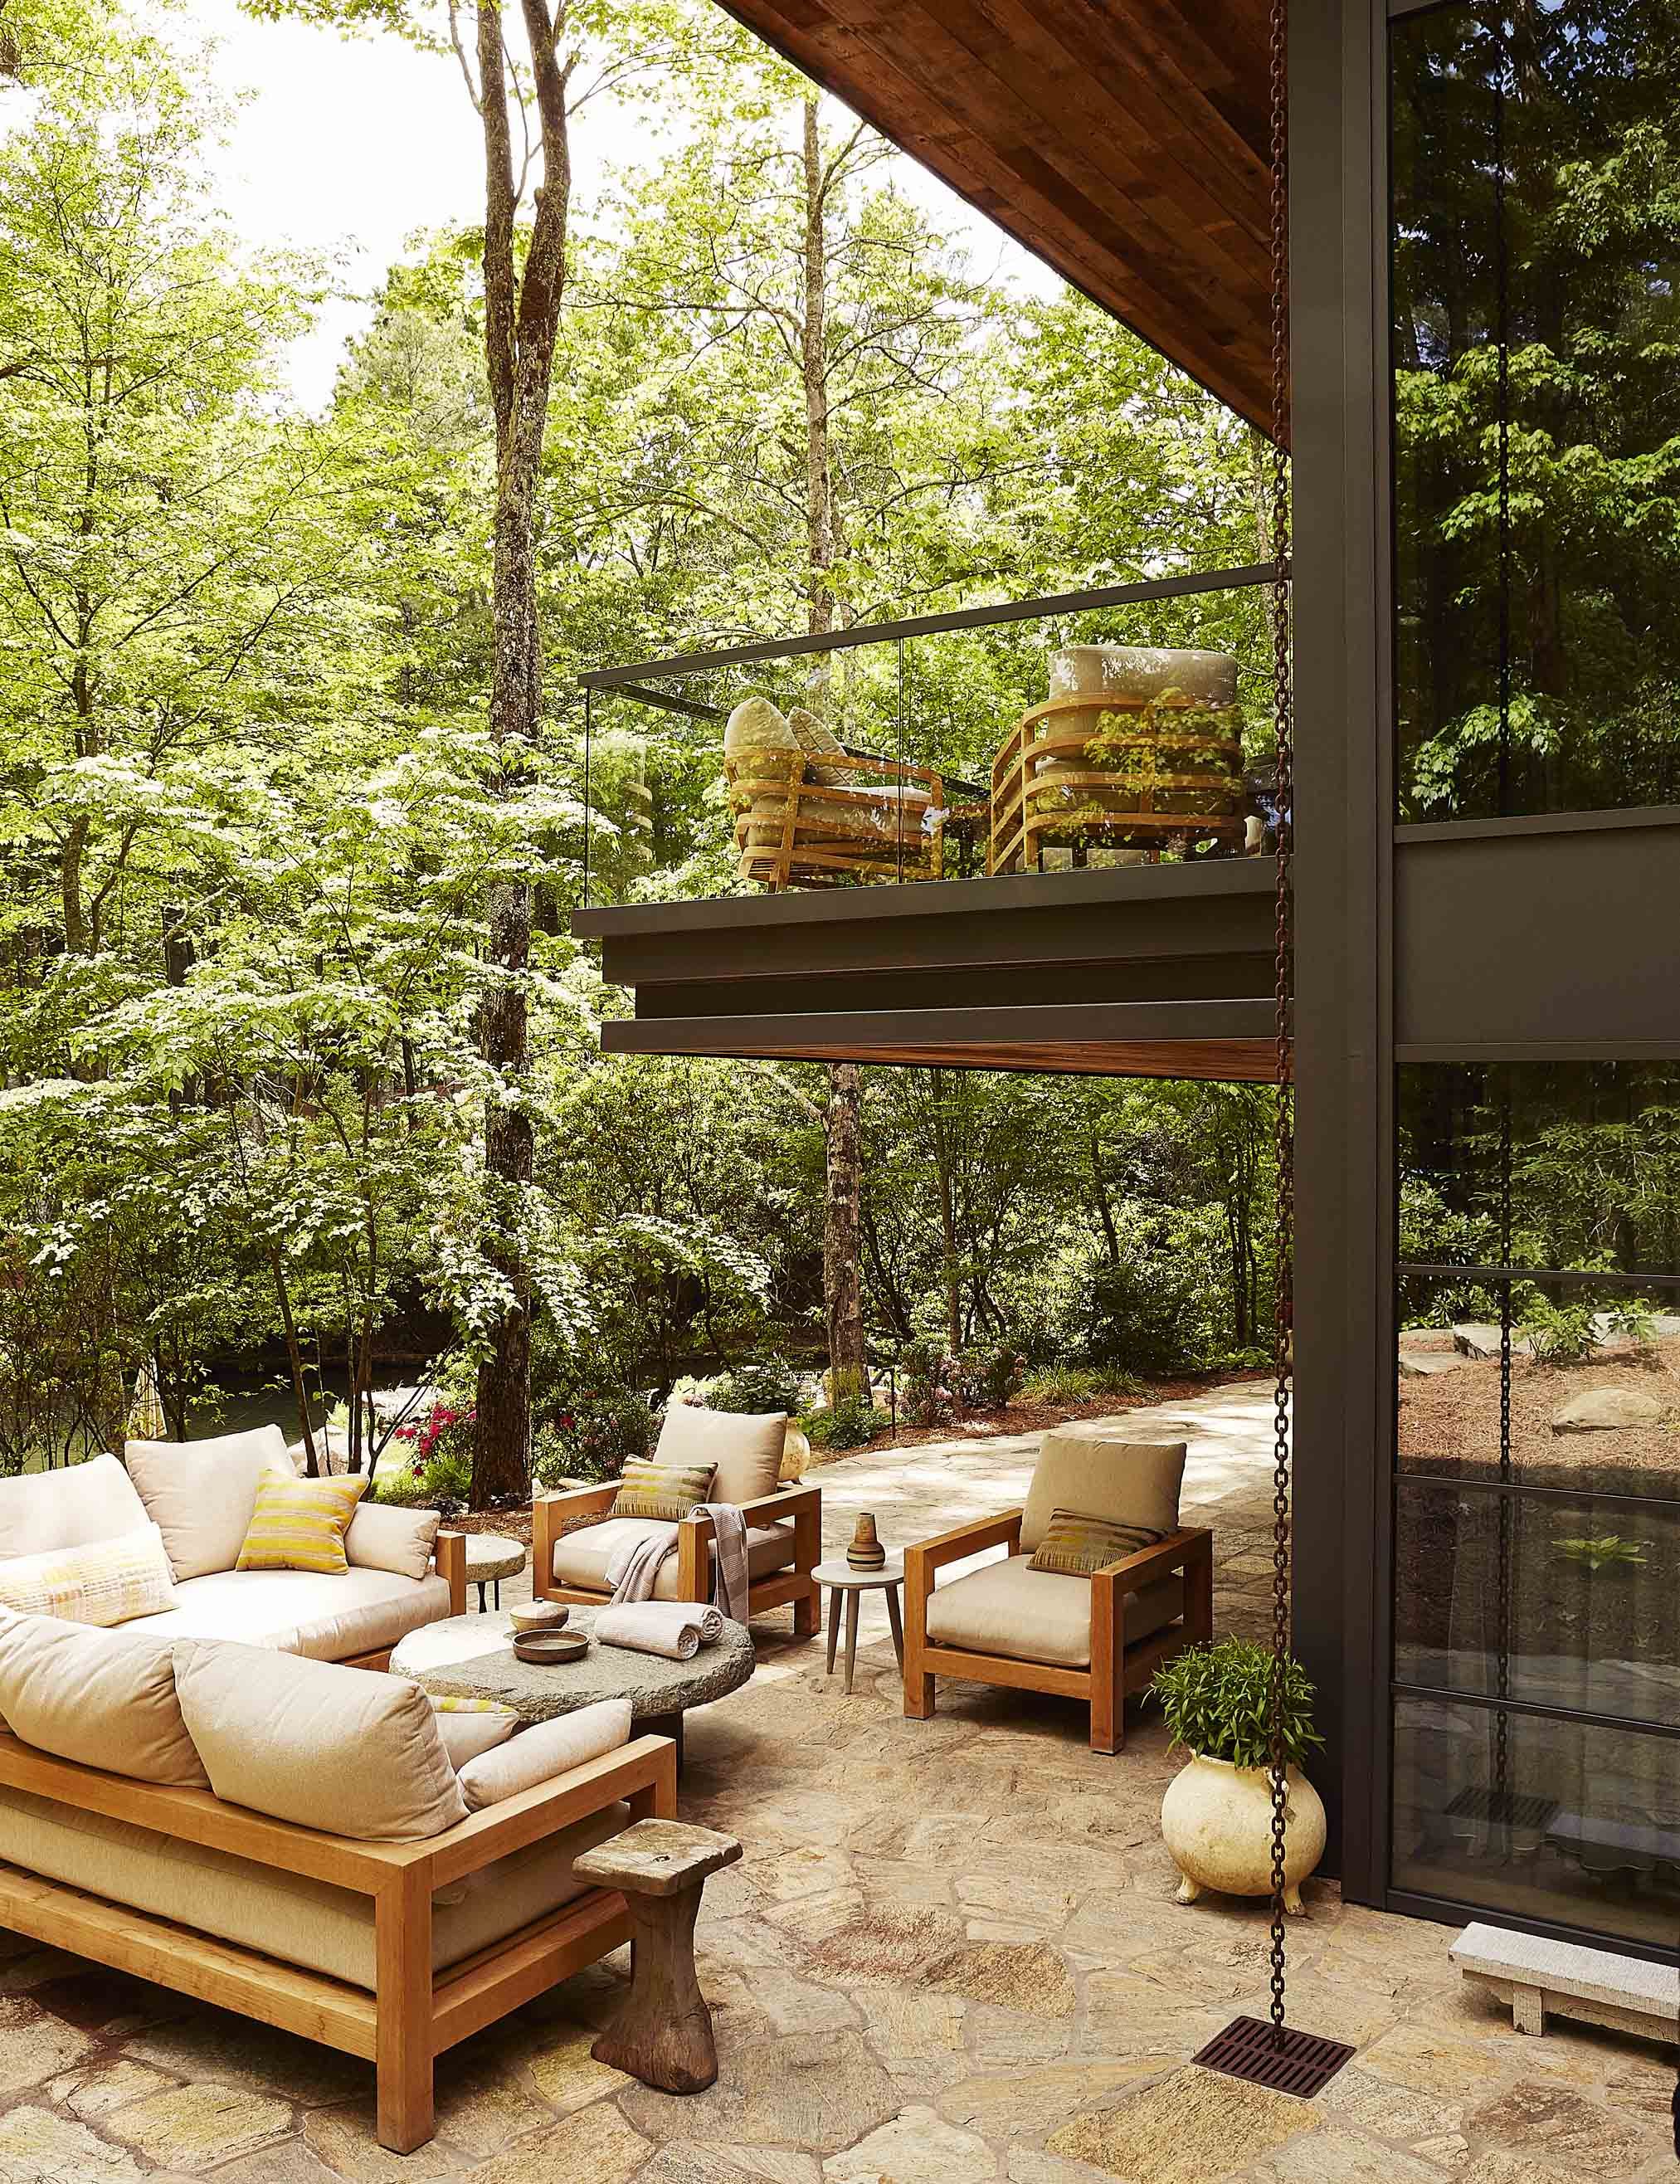 38 Patio Ideas For A Beautiful Backyard Designer - Outdoor Living Patio Ideas